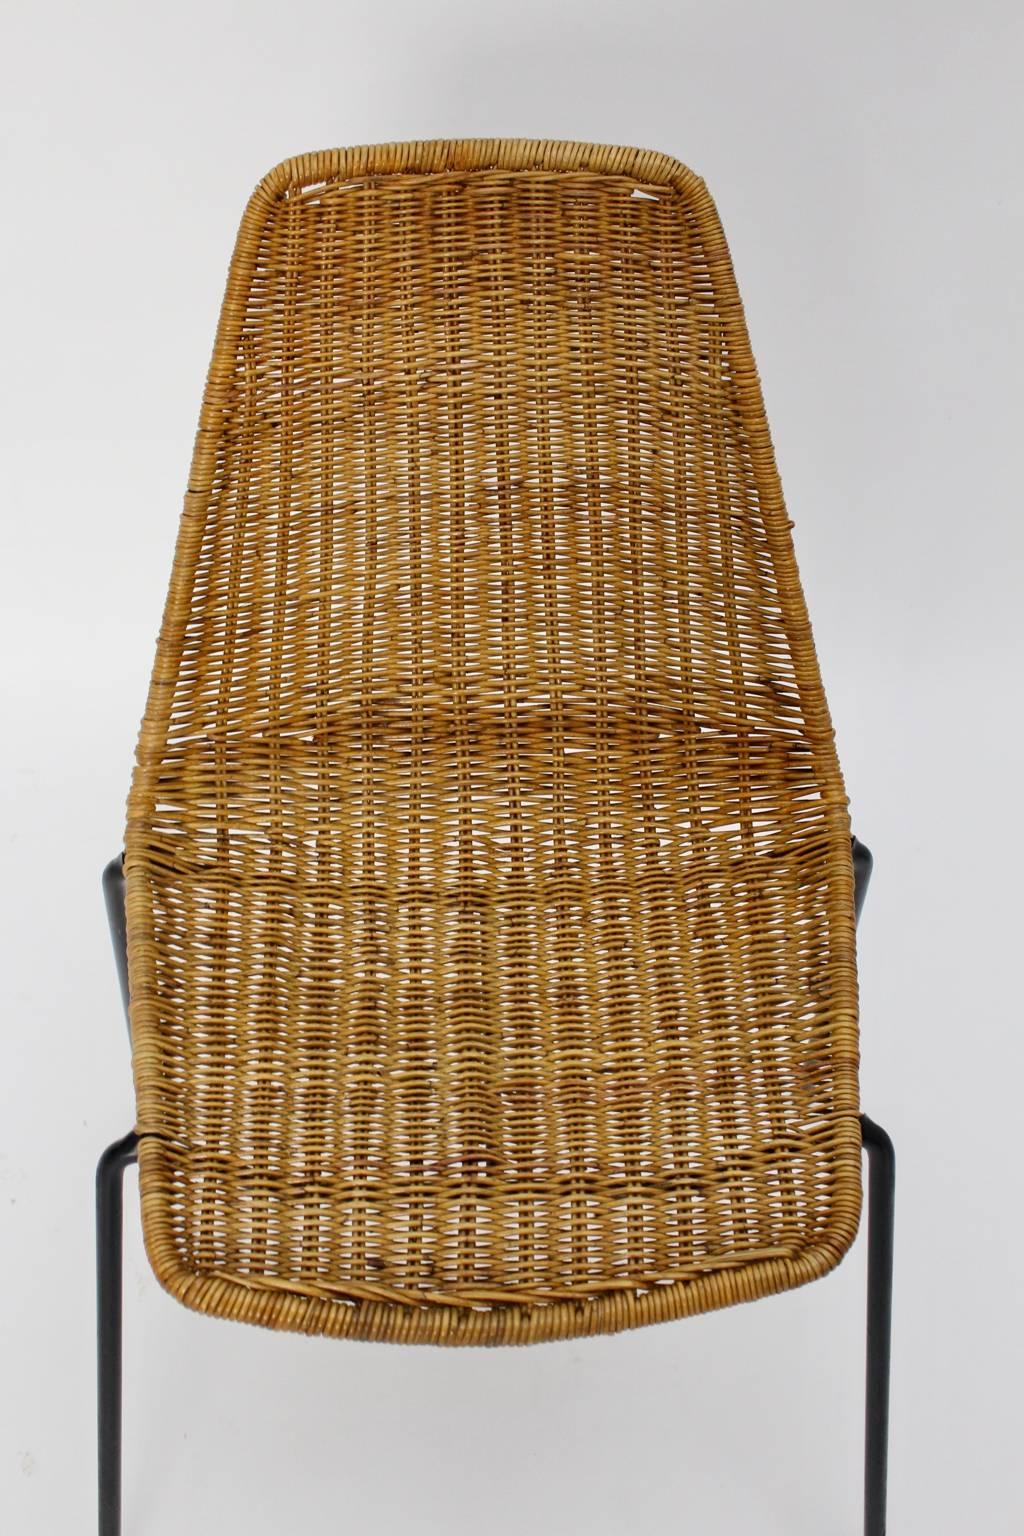 Midcentury Modern Rattan Two Chairs Basket Gian Franco Legler, 1951, Switzerland 9